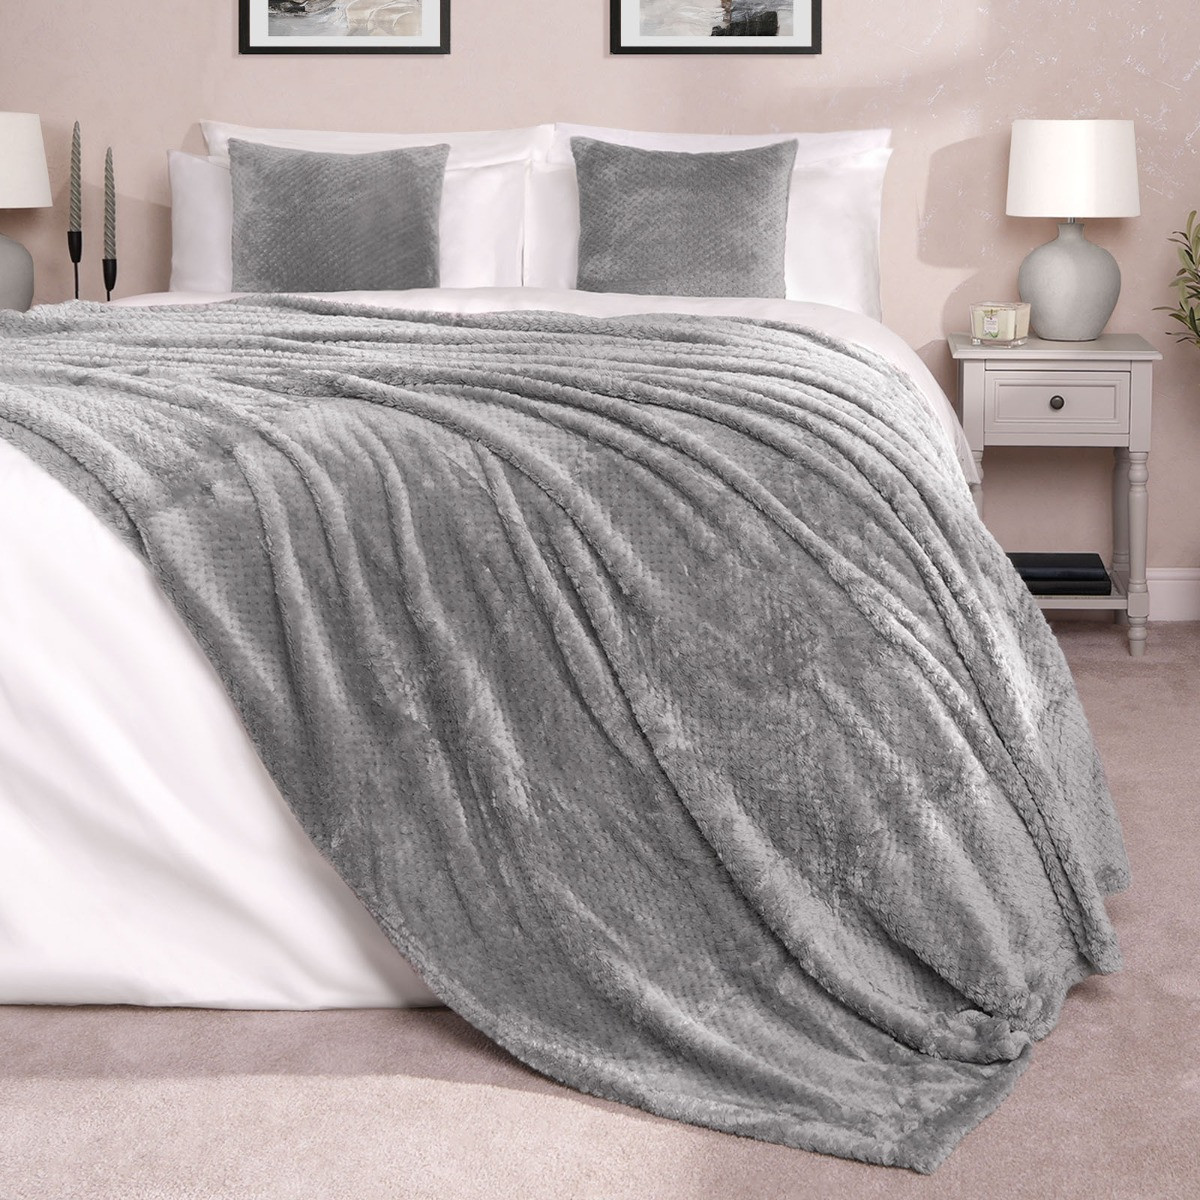 Luxury Waffle Mink Warm Throw Over Sofa Bed Soft Blanket 150 x 200cm Charcoal>